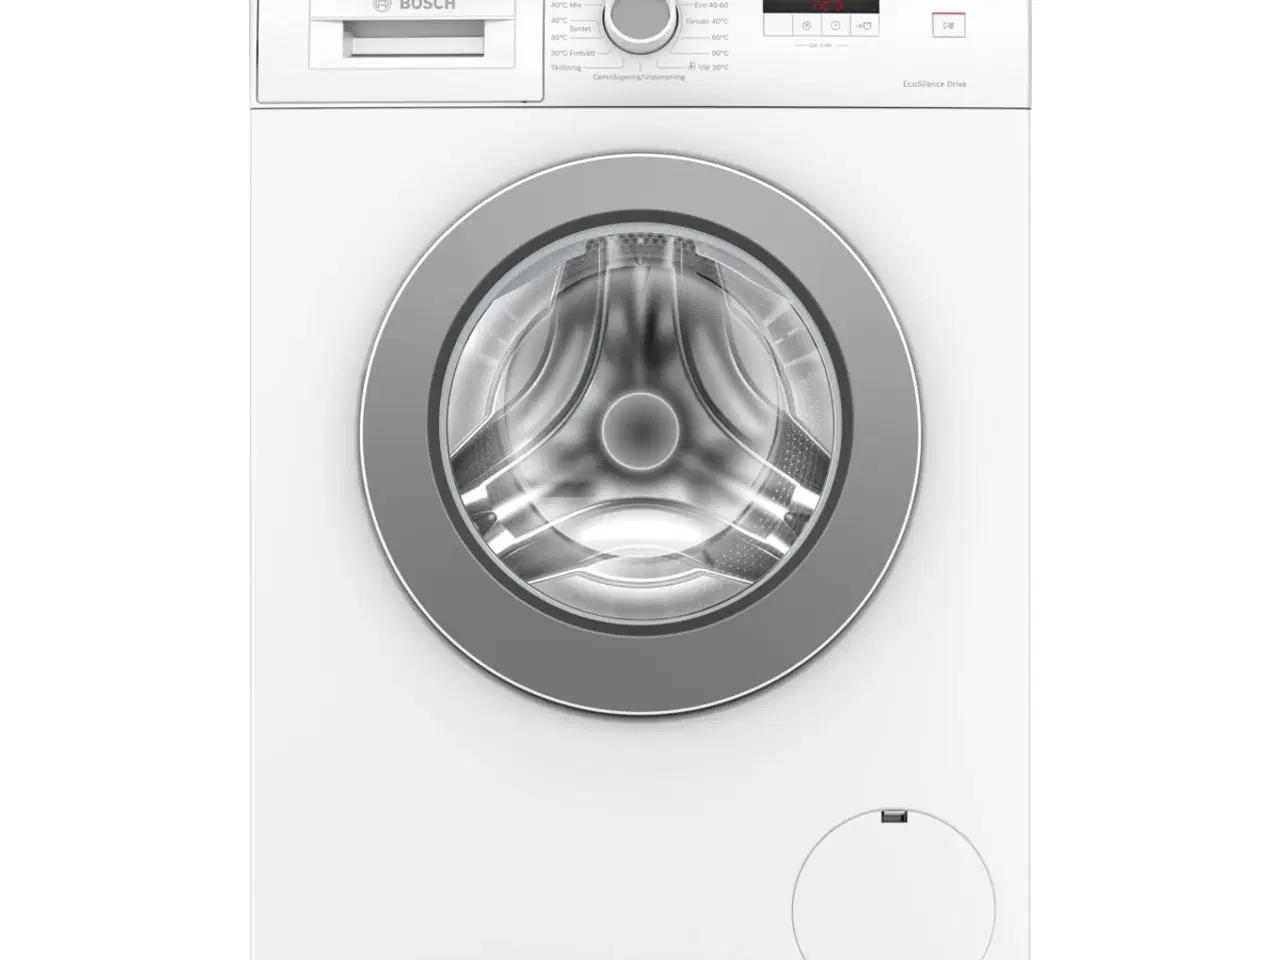 Billede 1 - BOSCH  vaskemaskine, model WAJ280P3SN